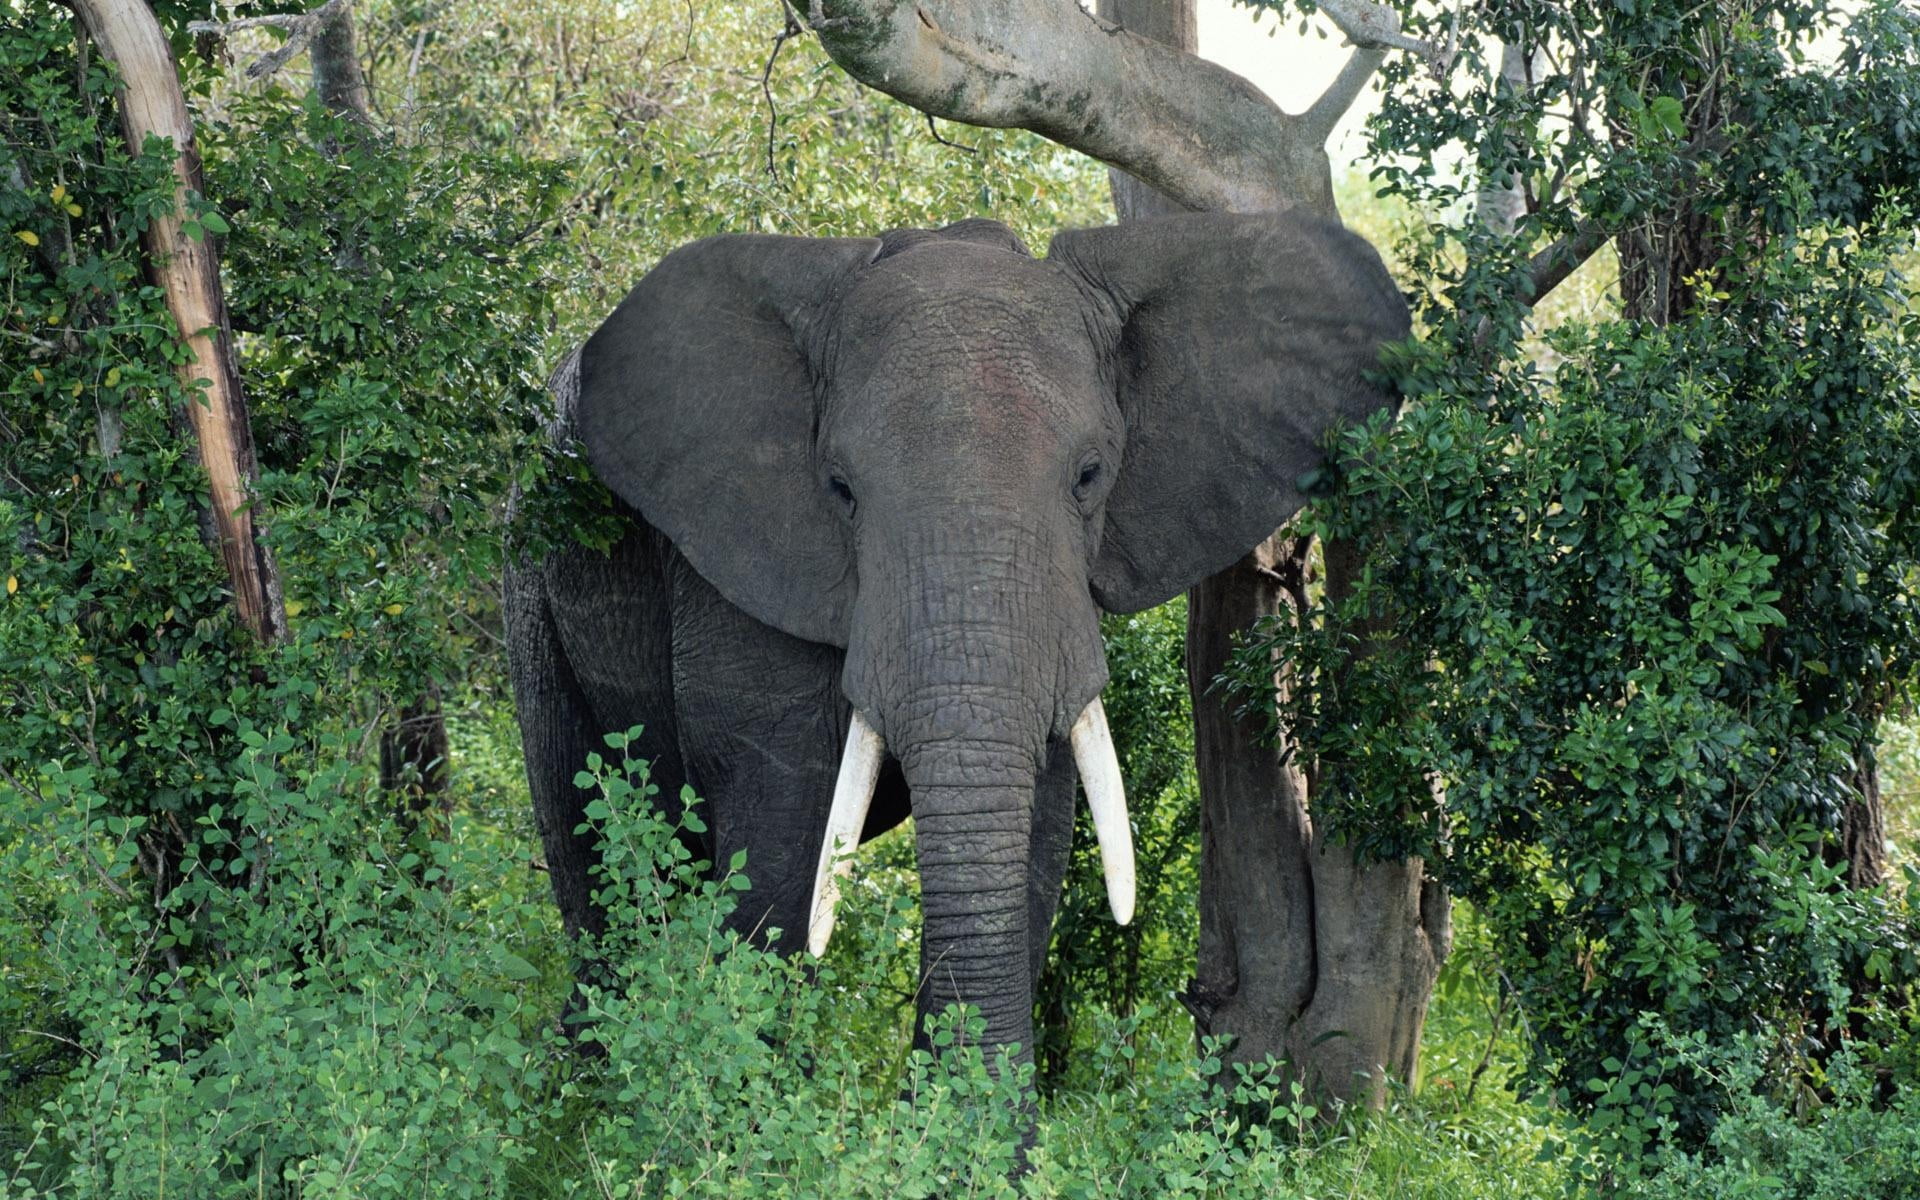 African elephant, ears, walk, trees, grass, wildlife, nature